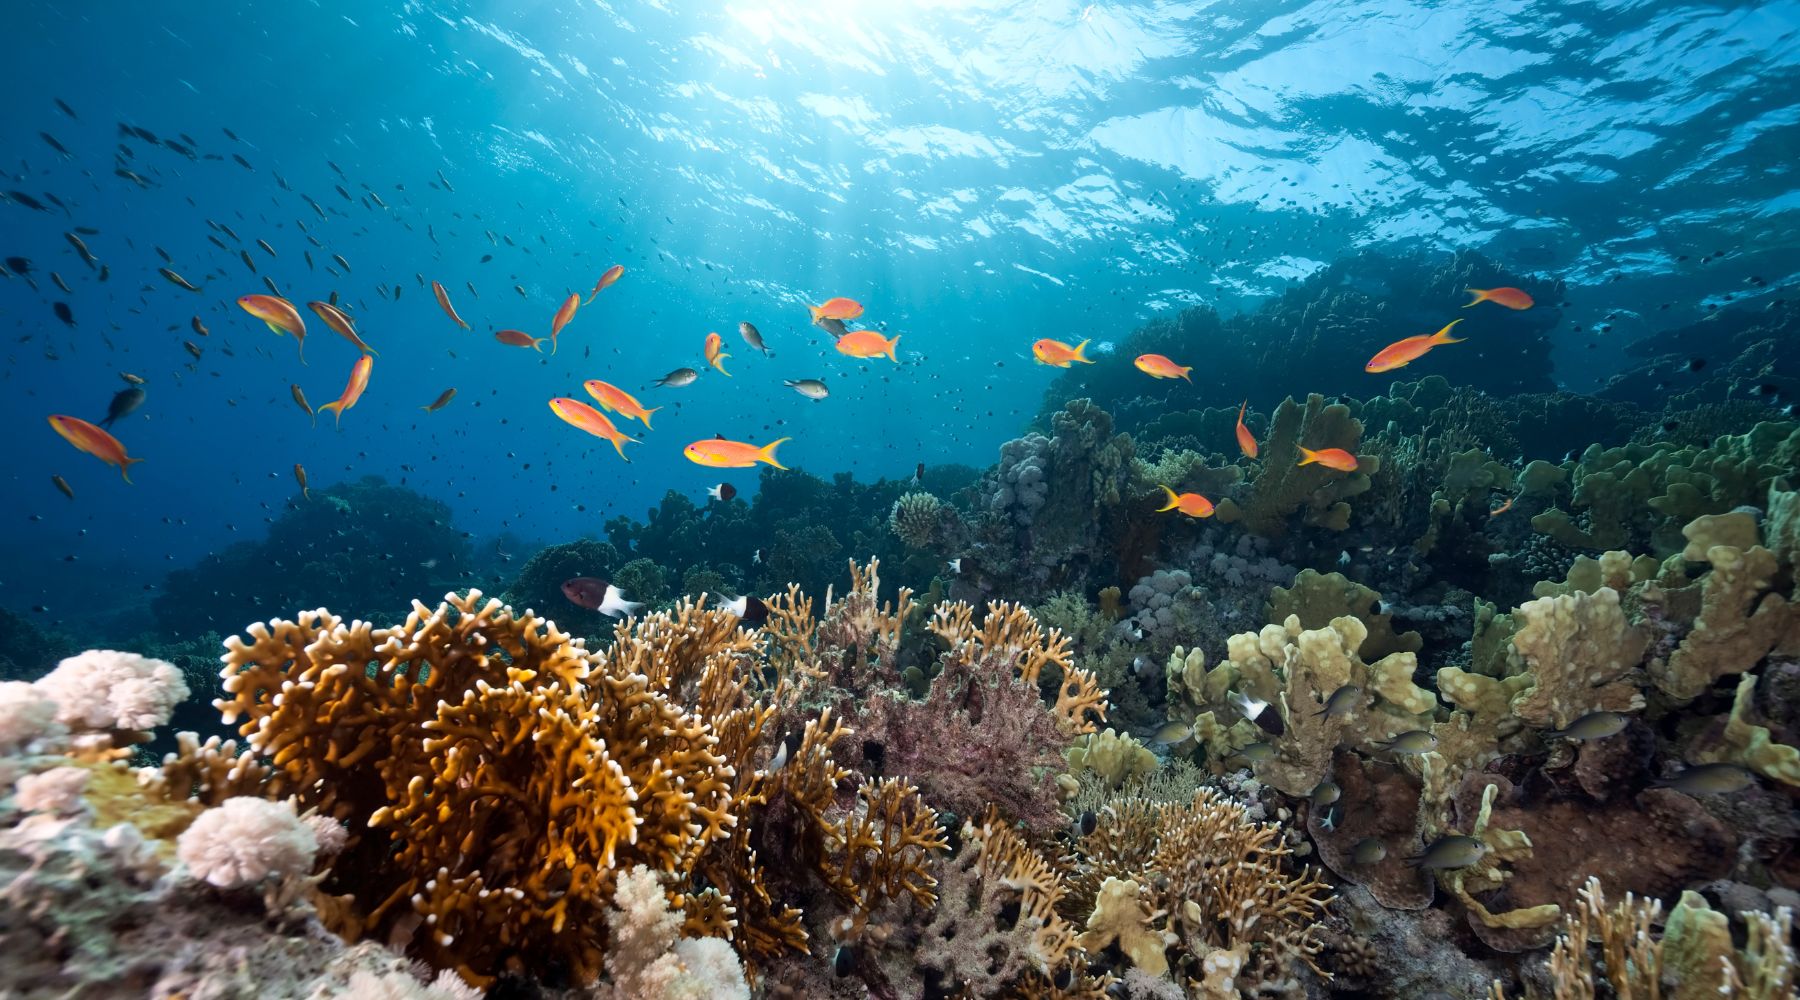 Fish swimming in the ocean above the coral reef - ocean temperatures rising